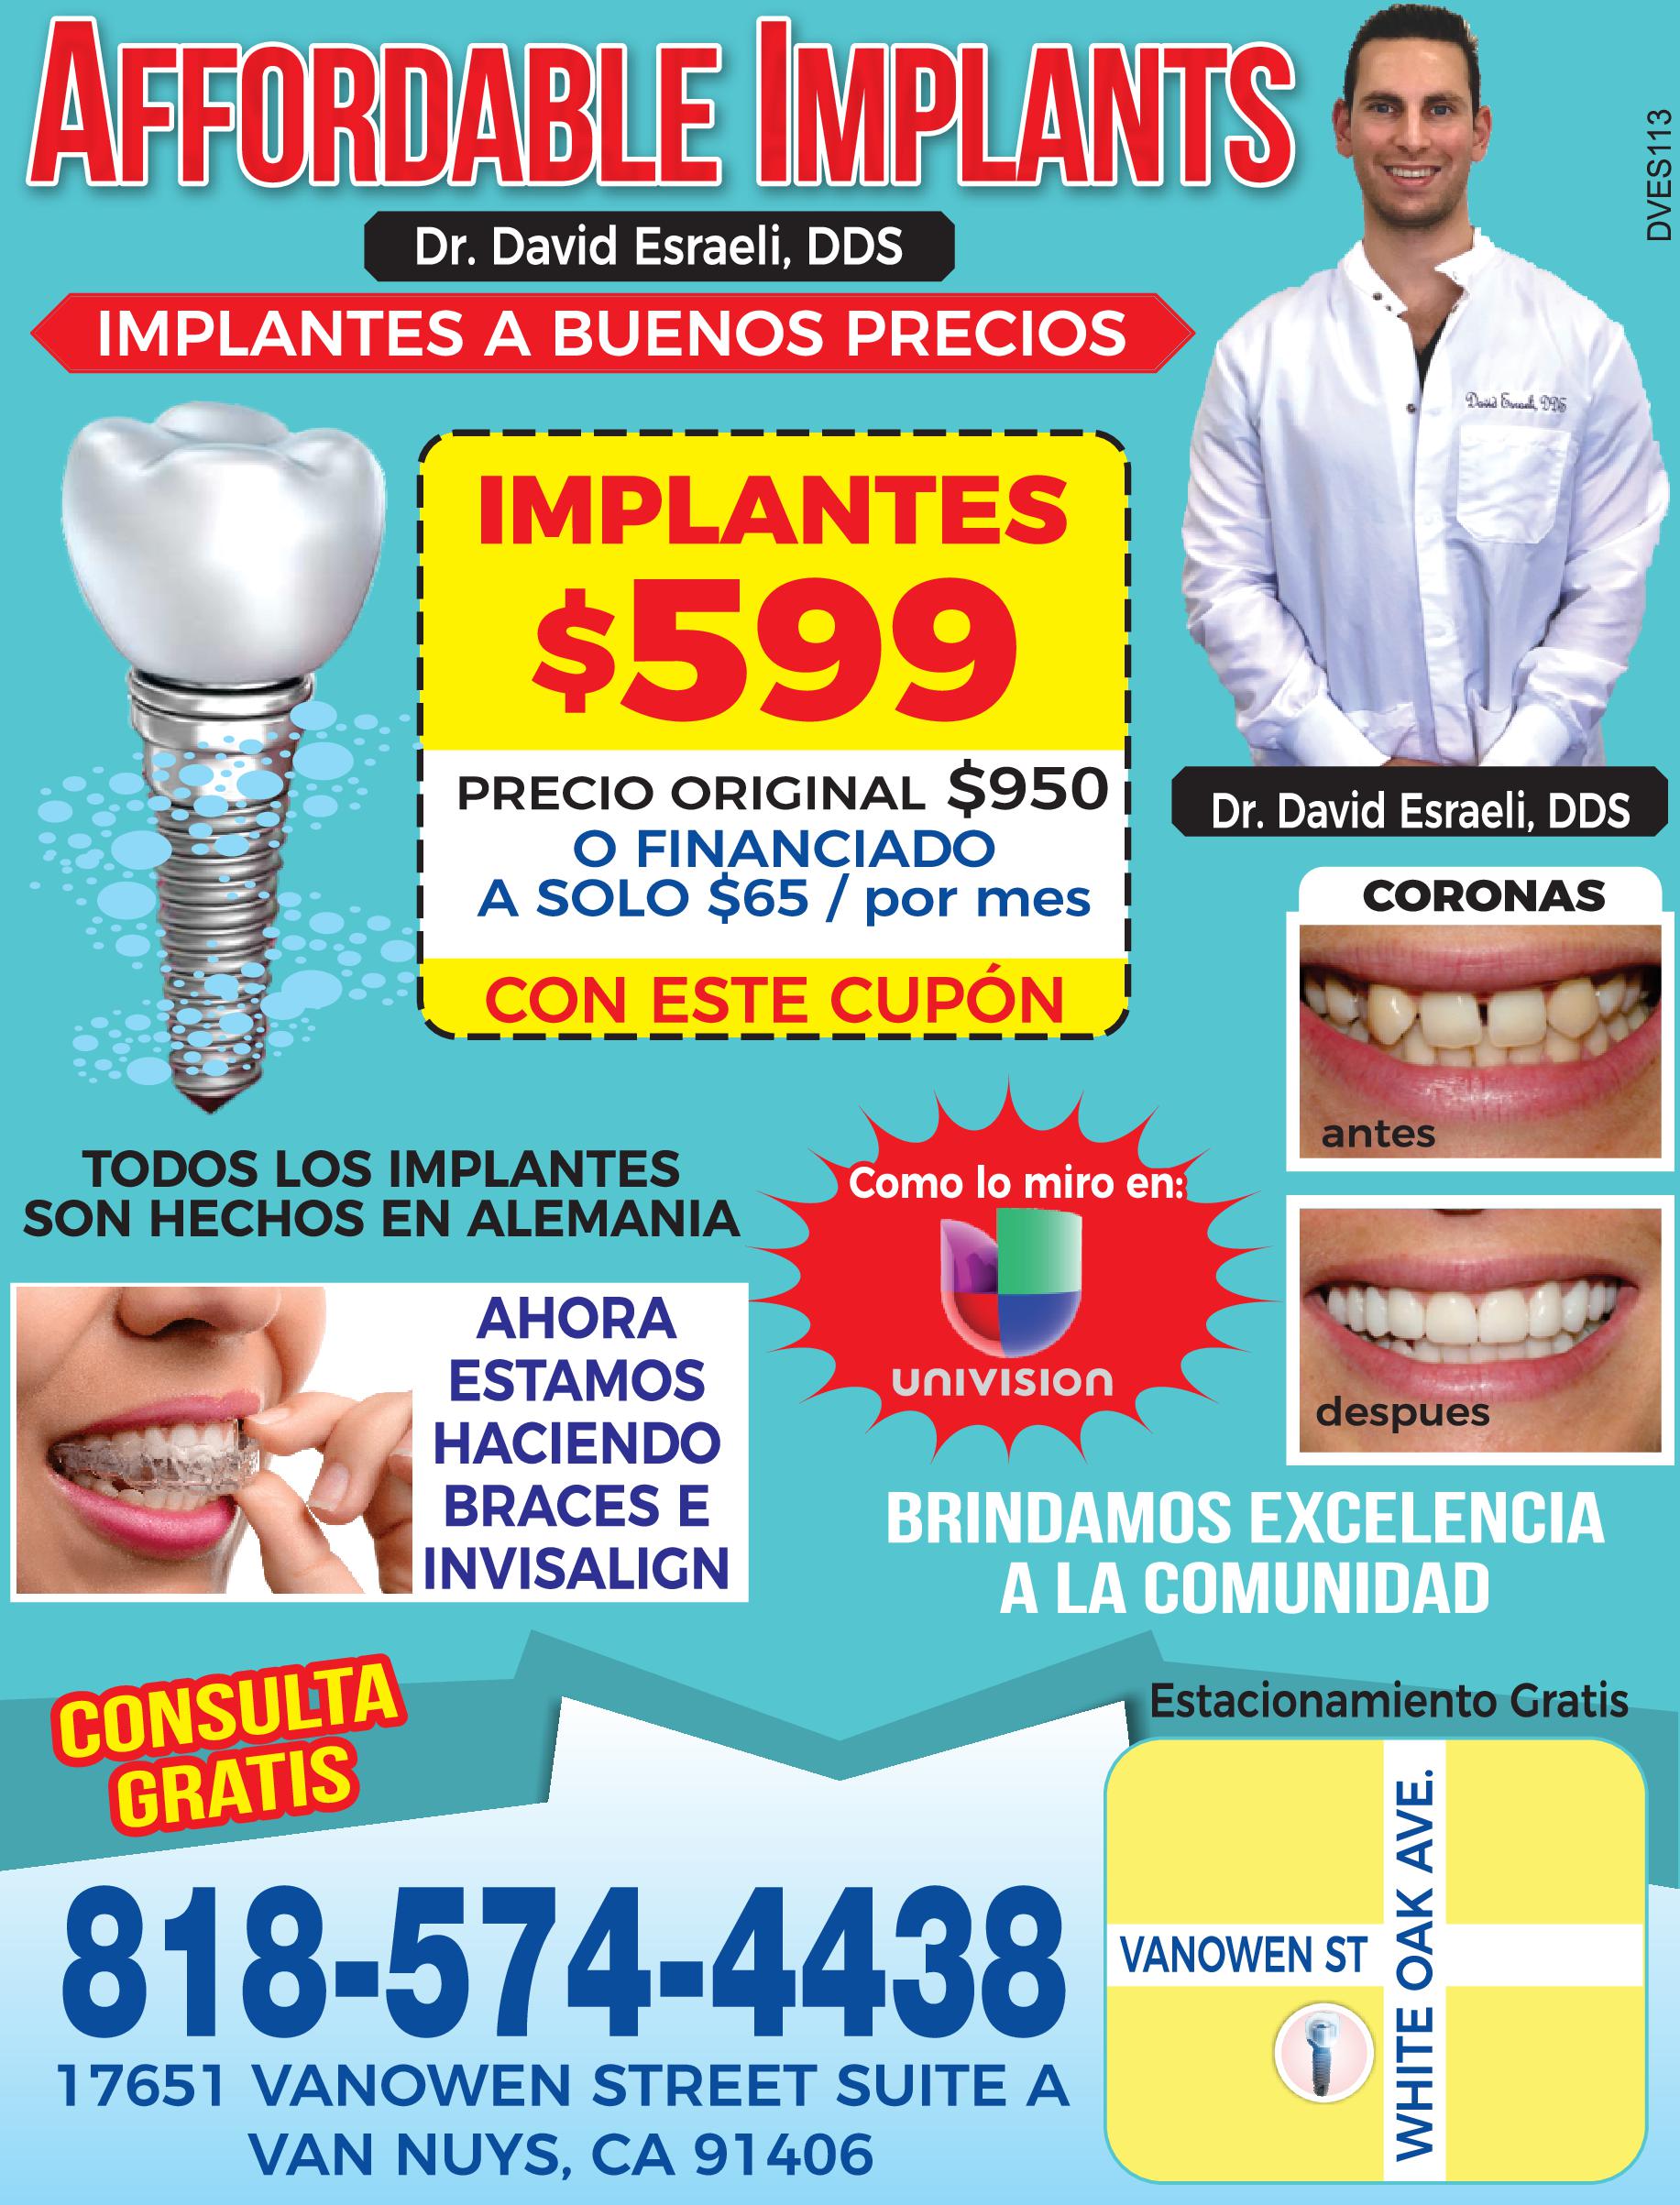 Affordable Implants-implantes A Buenos Precios-david Esraeli Dds